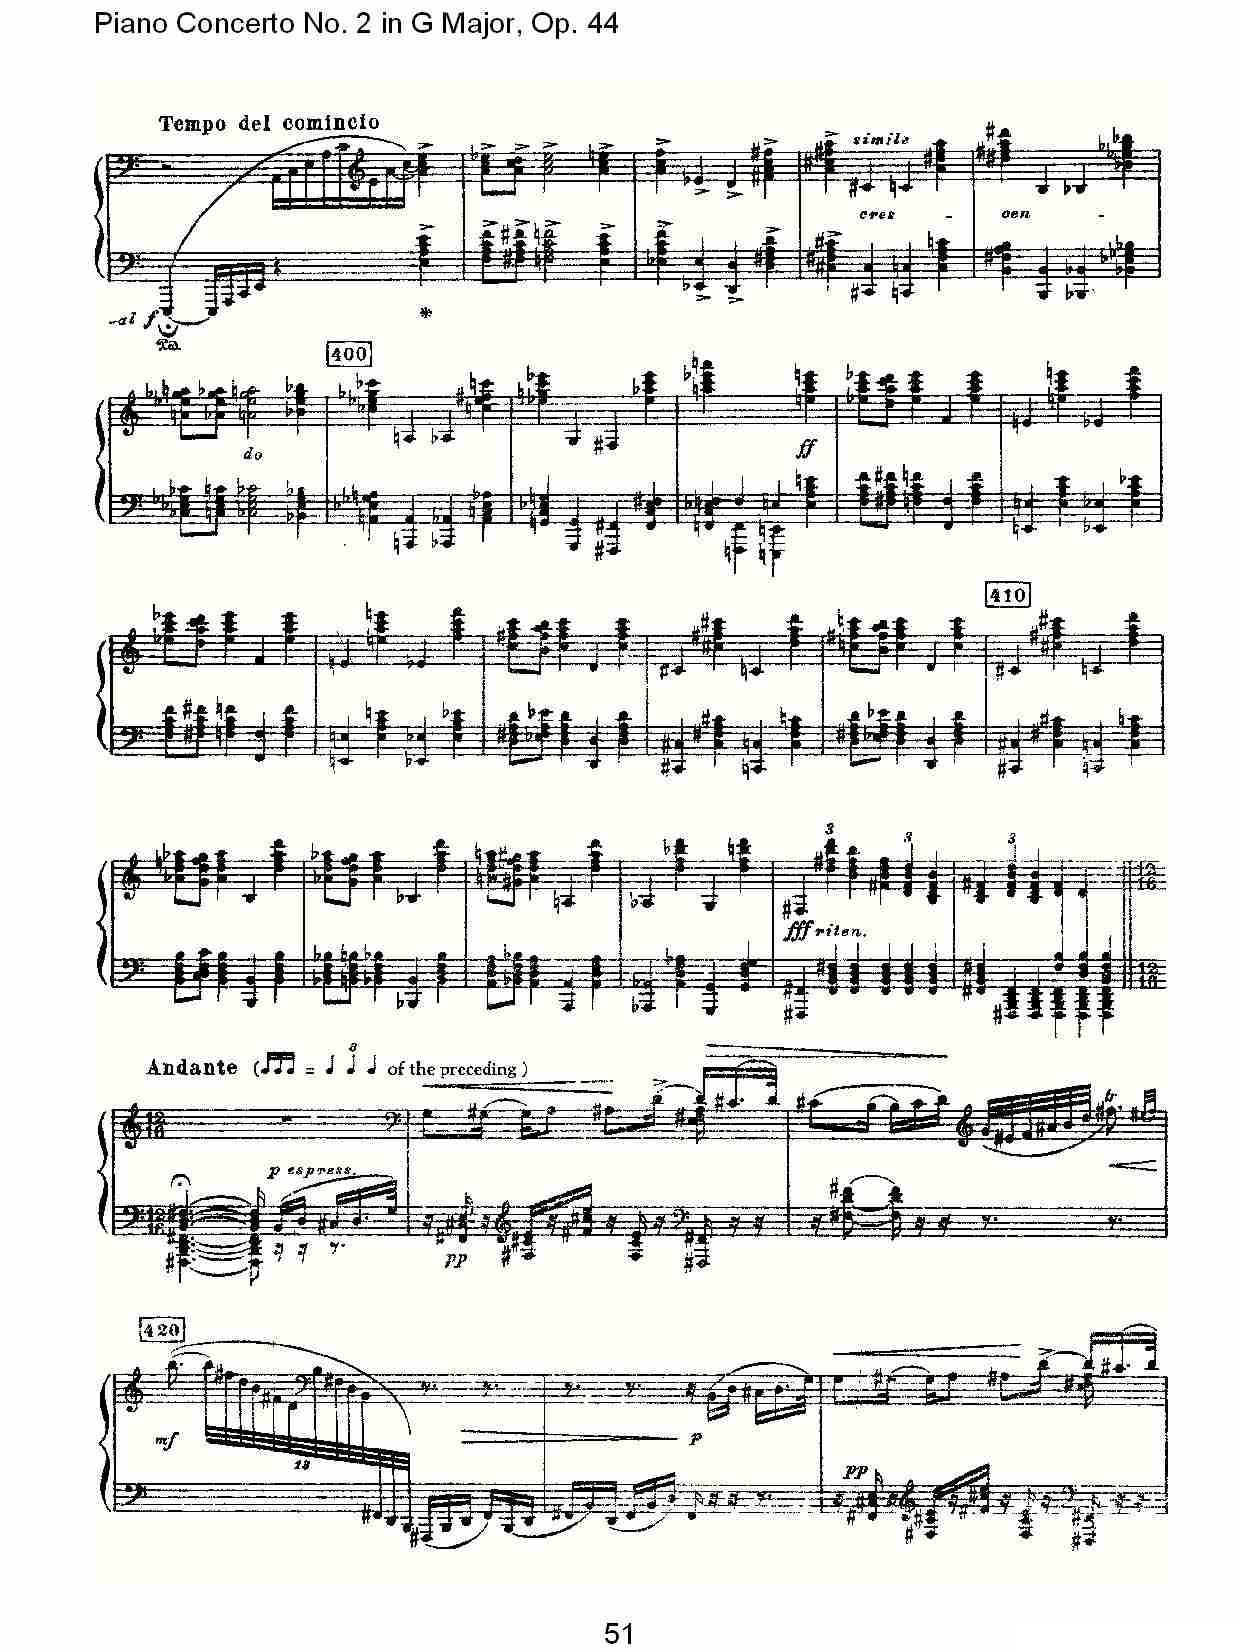 G大调第二钢琴协奏曲, Op.44第一乐章（二）钢琴曲谱（图21）